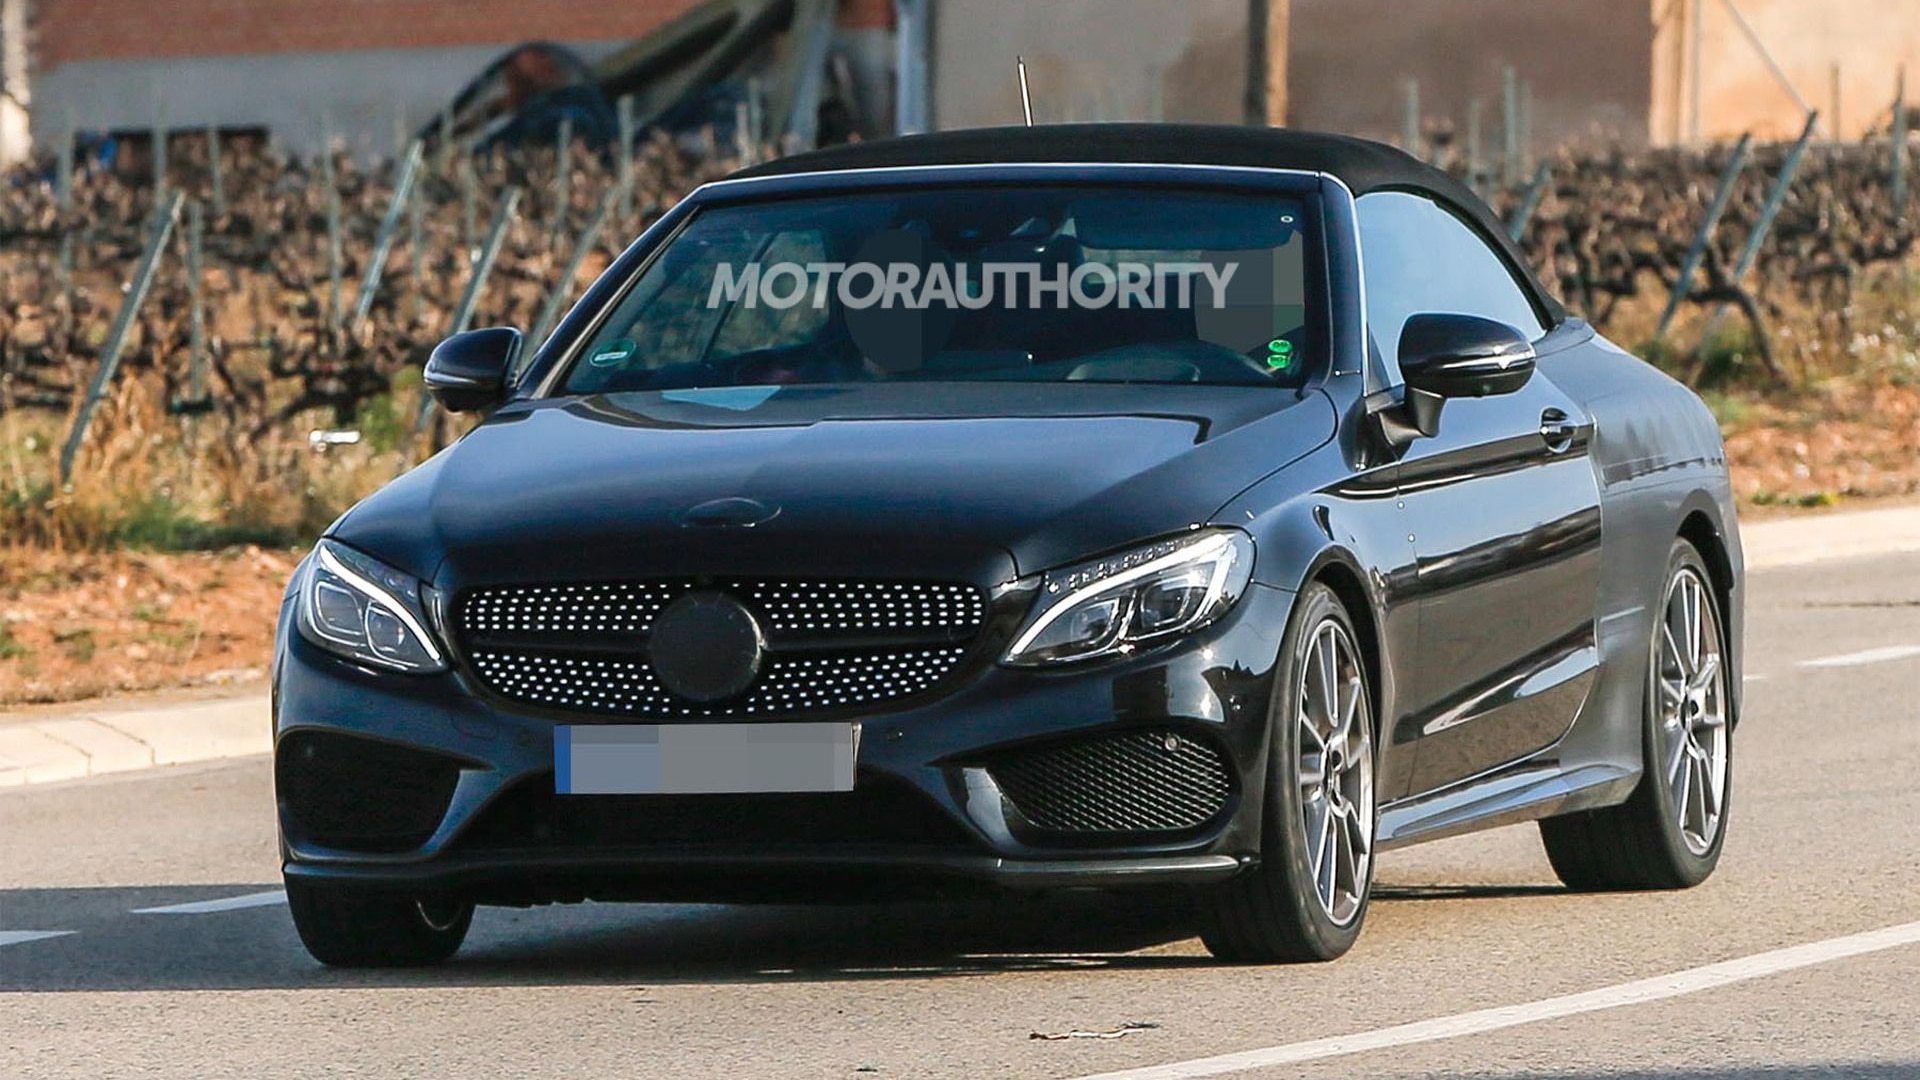 2017 Mercedes-AMG C43 Cabriolet spy shots - Image via S. Baldauf/SB-Medien